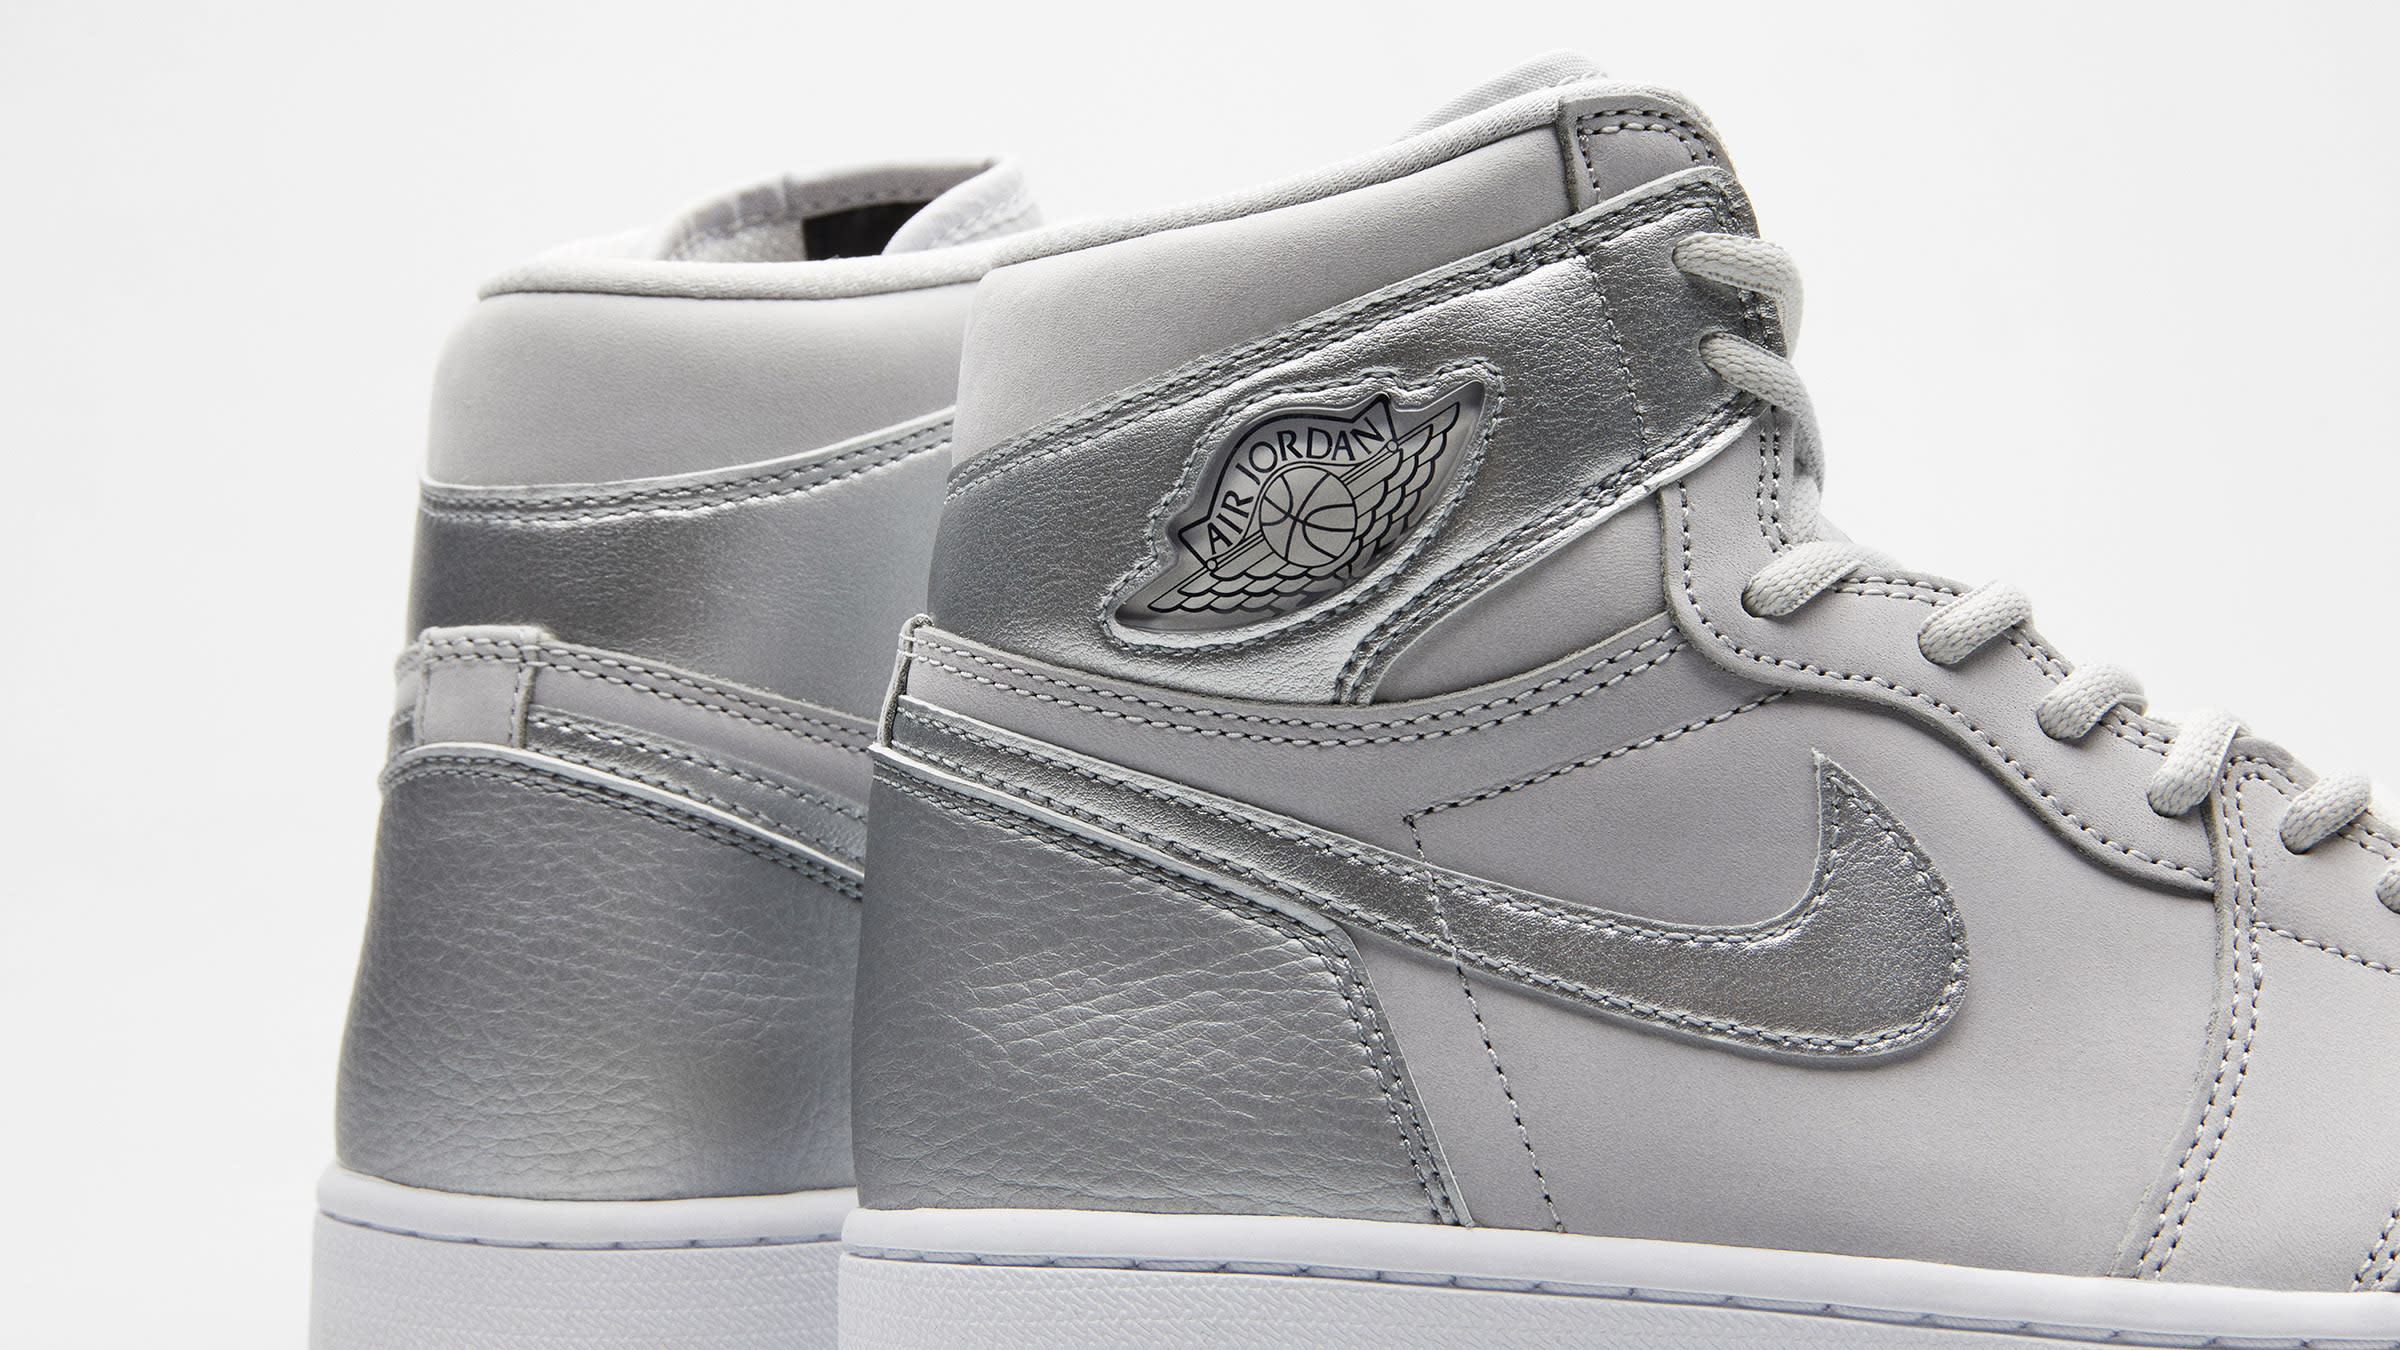 Nike Air Jordan 1 High OG Co JP (Grey, Silver & White) | END. Launches